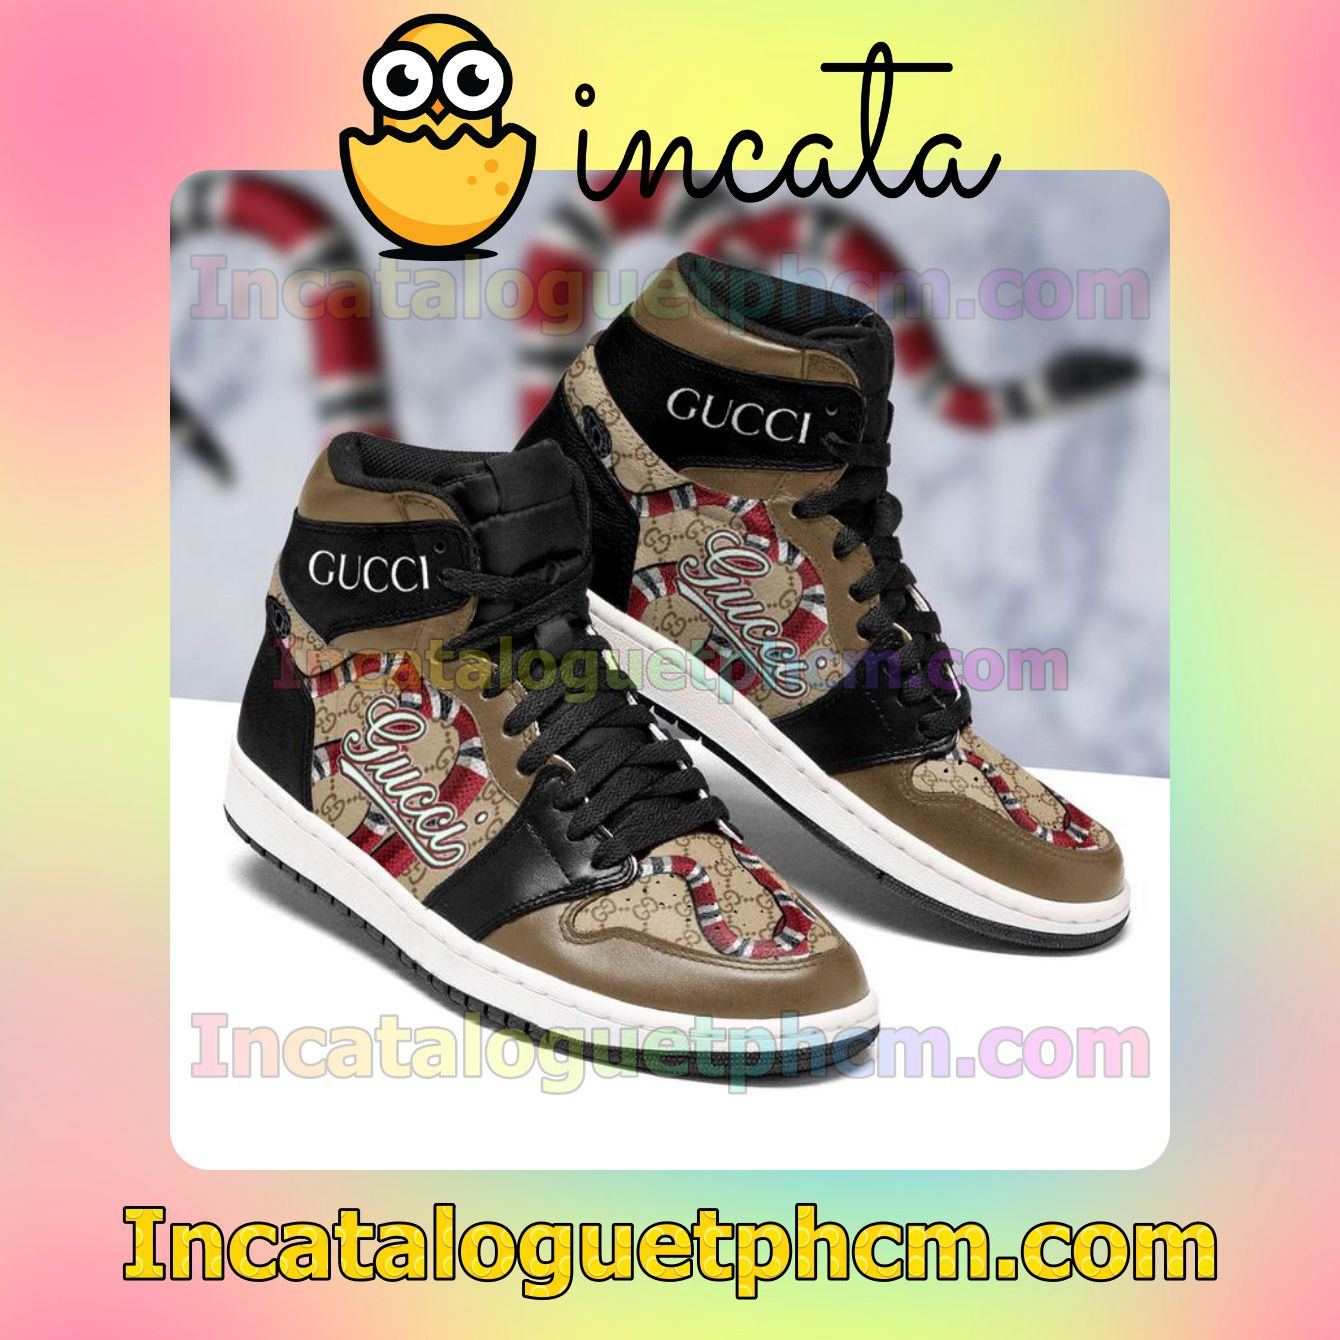 Gucci Snake Black Air Jordan 1 Inspired Shoes